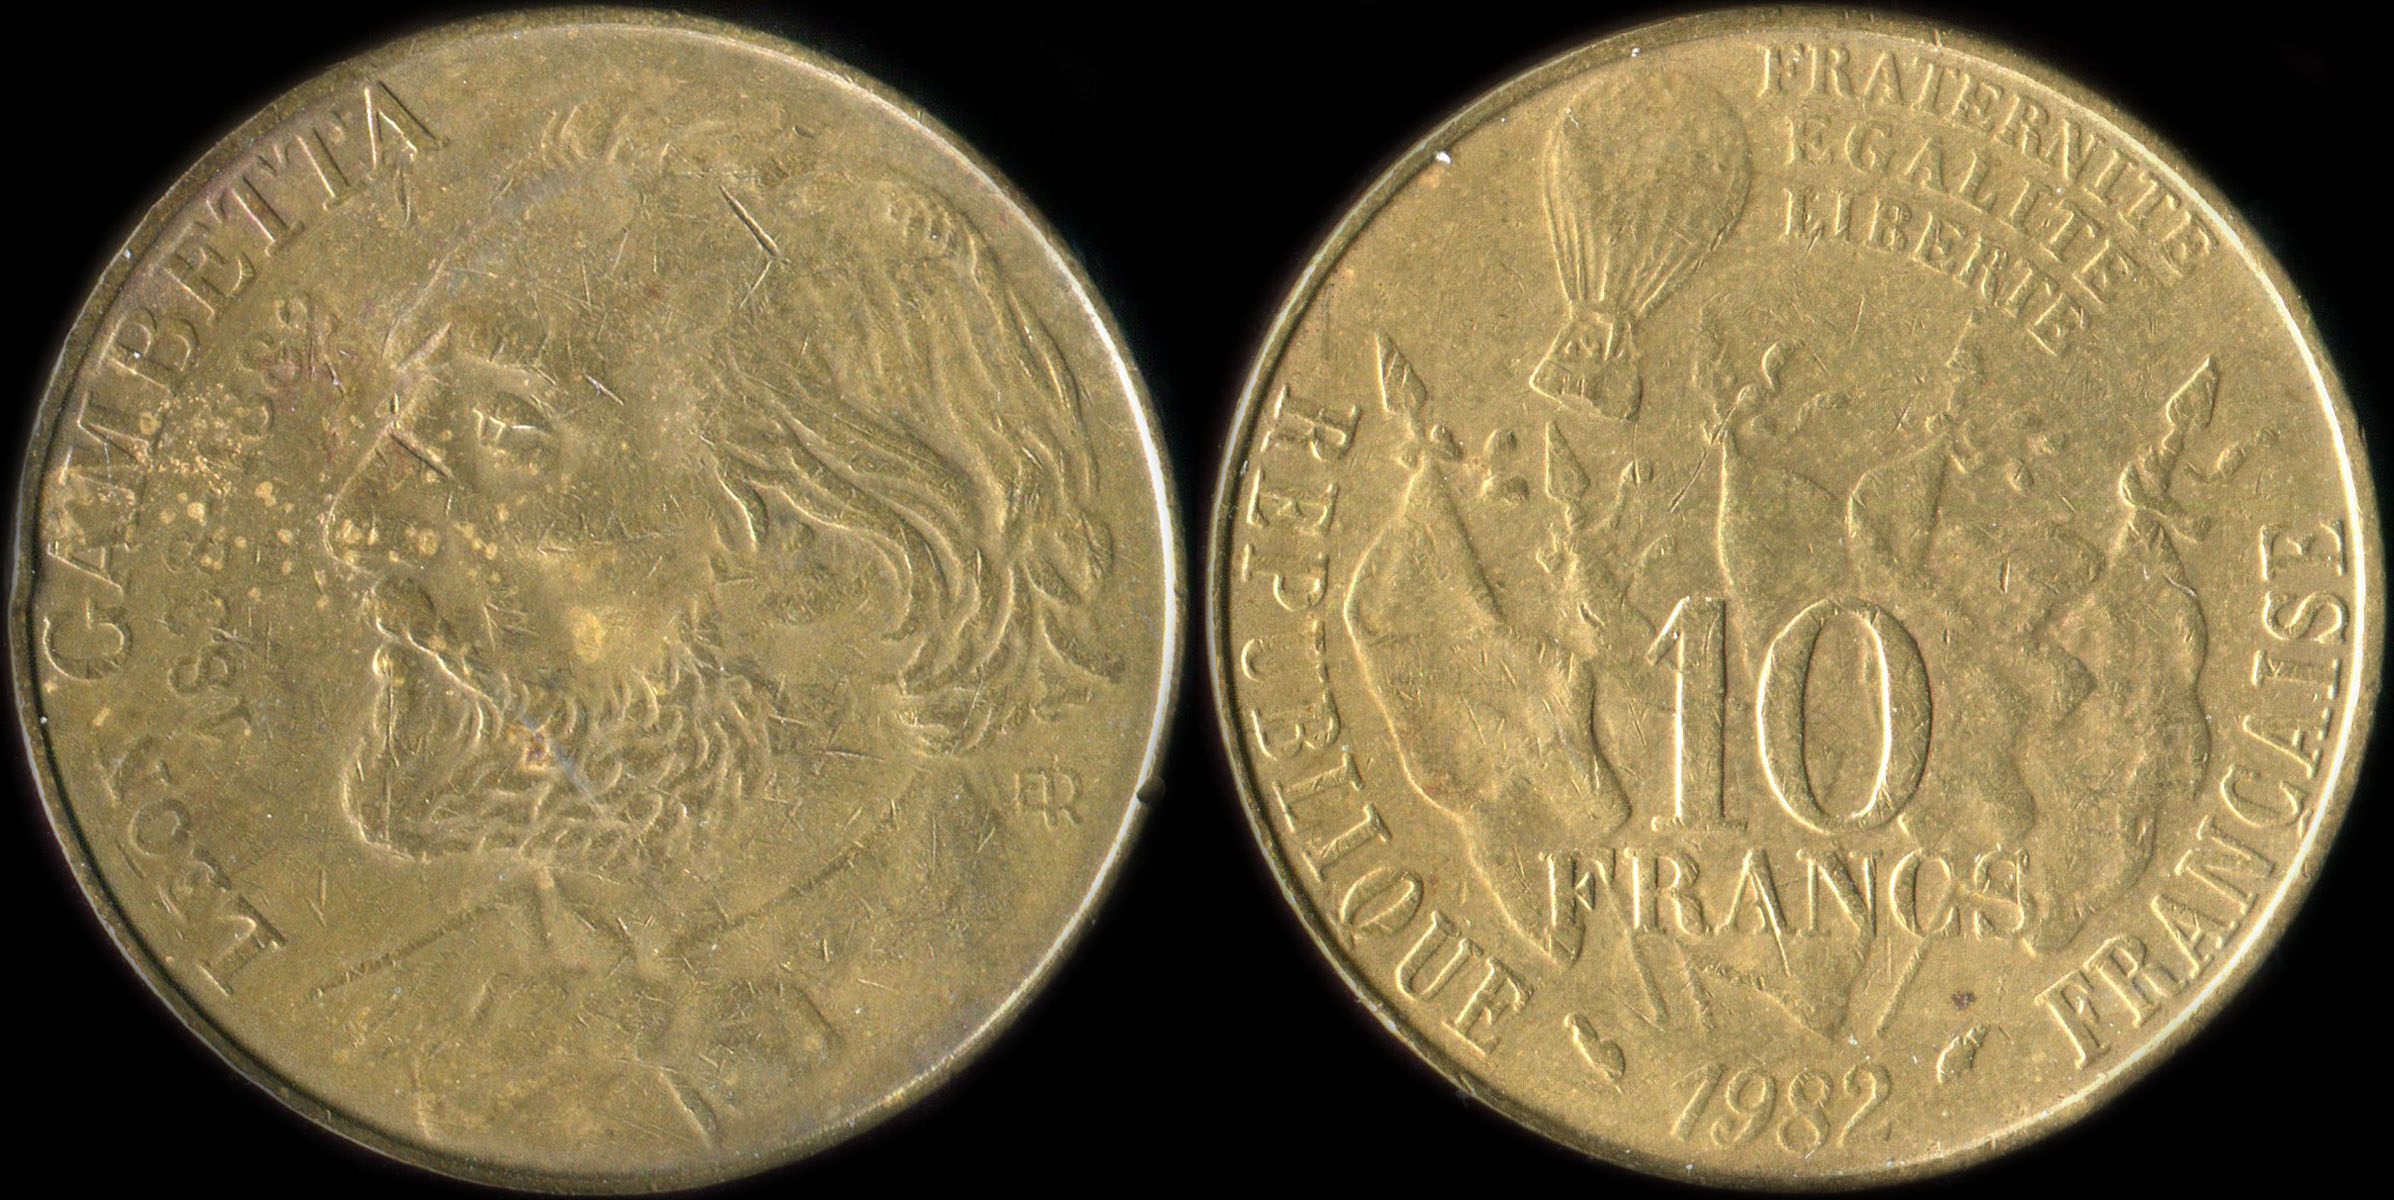 Fausse pice de 10 francs Gambetta 1982